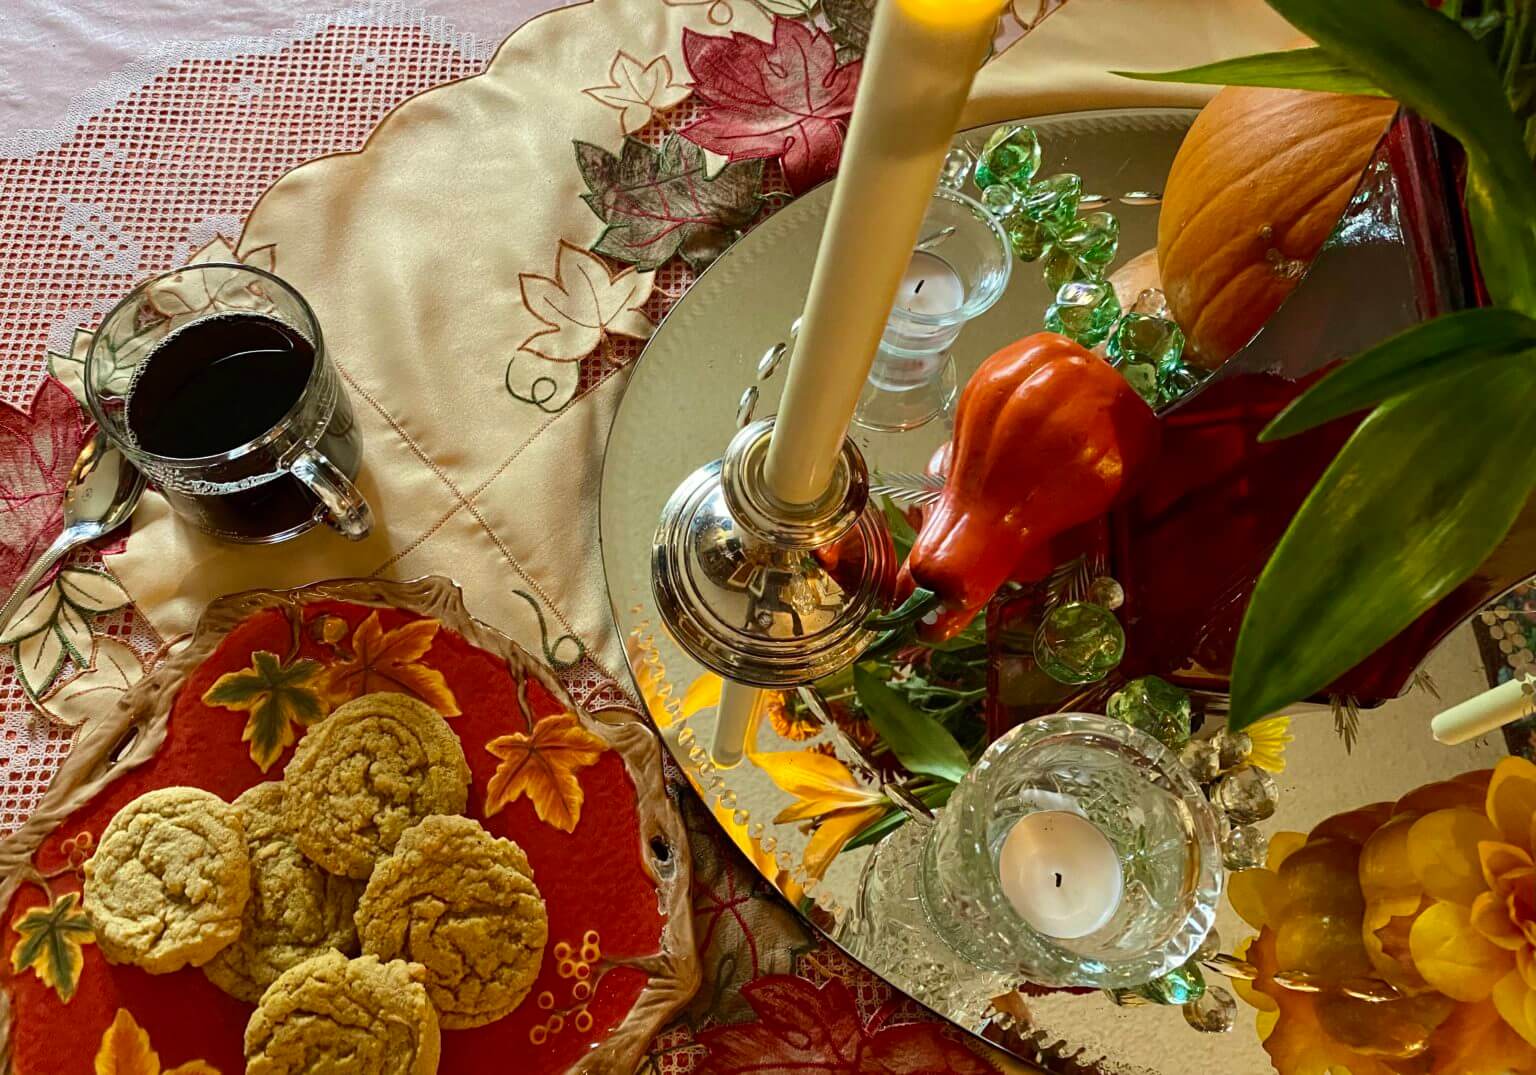 Good Morning Recipe Blog: Harvest Spice Pumpkin Cookies